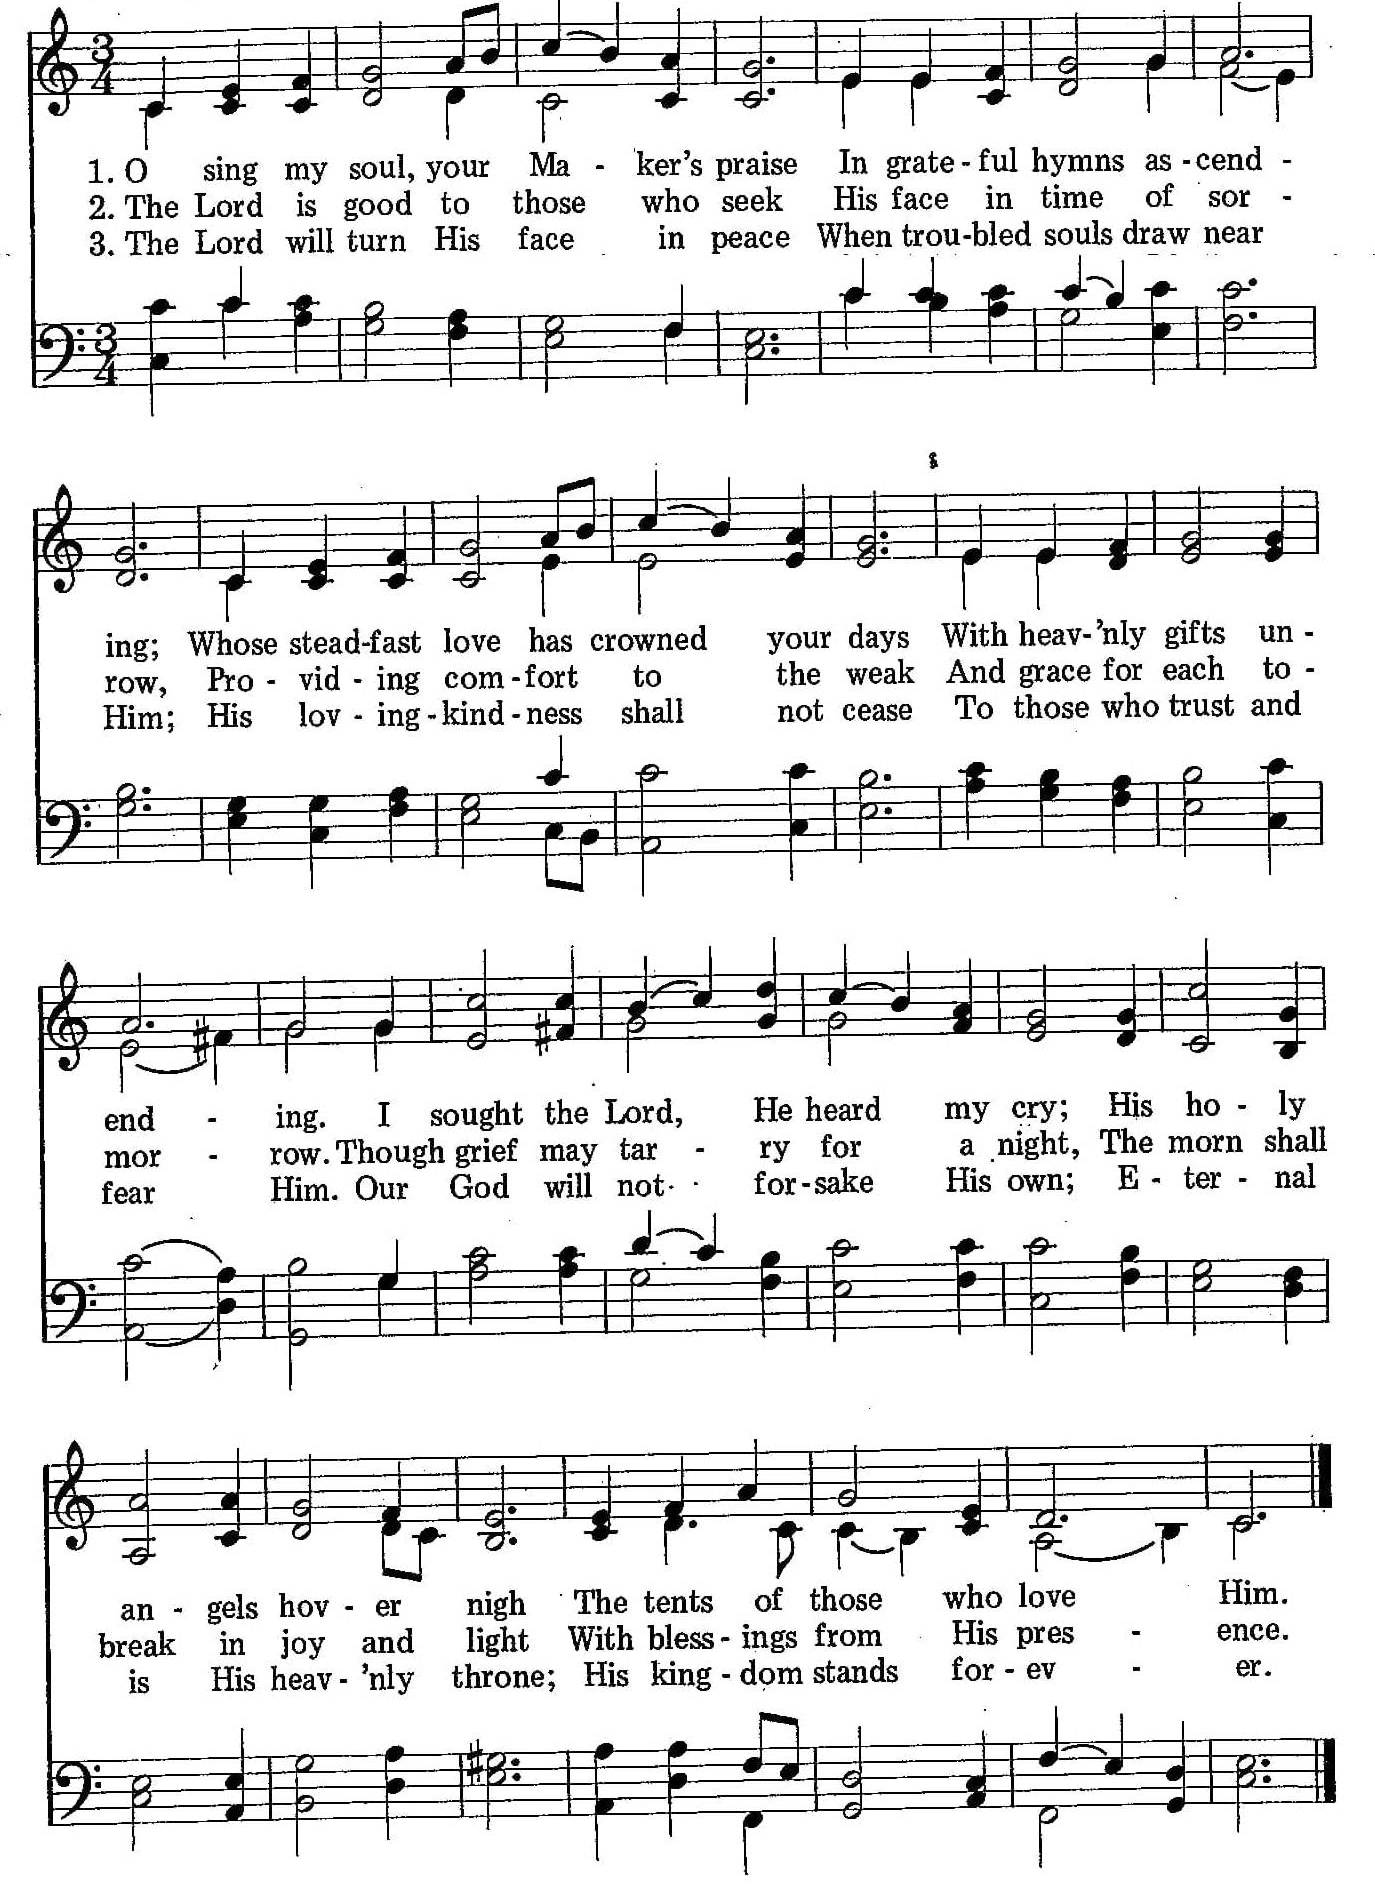 037 – O Sing, My Soul, Your Maker's Praise sheet music